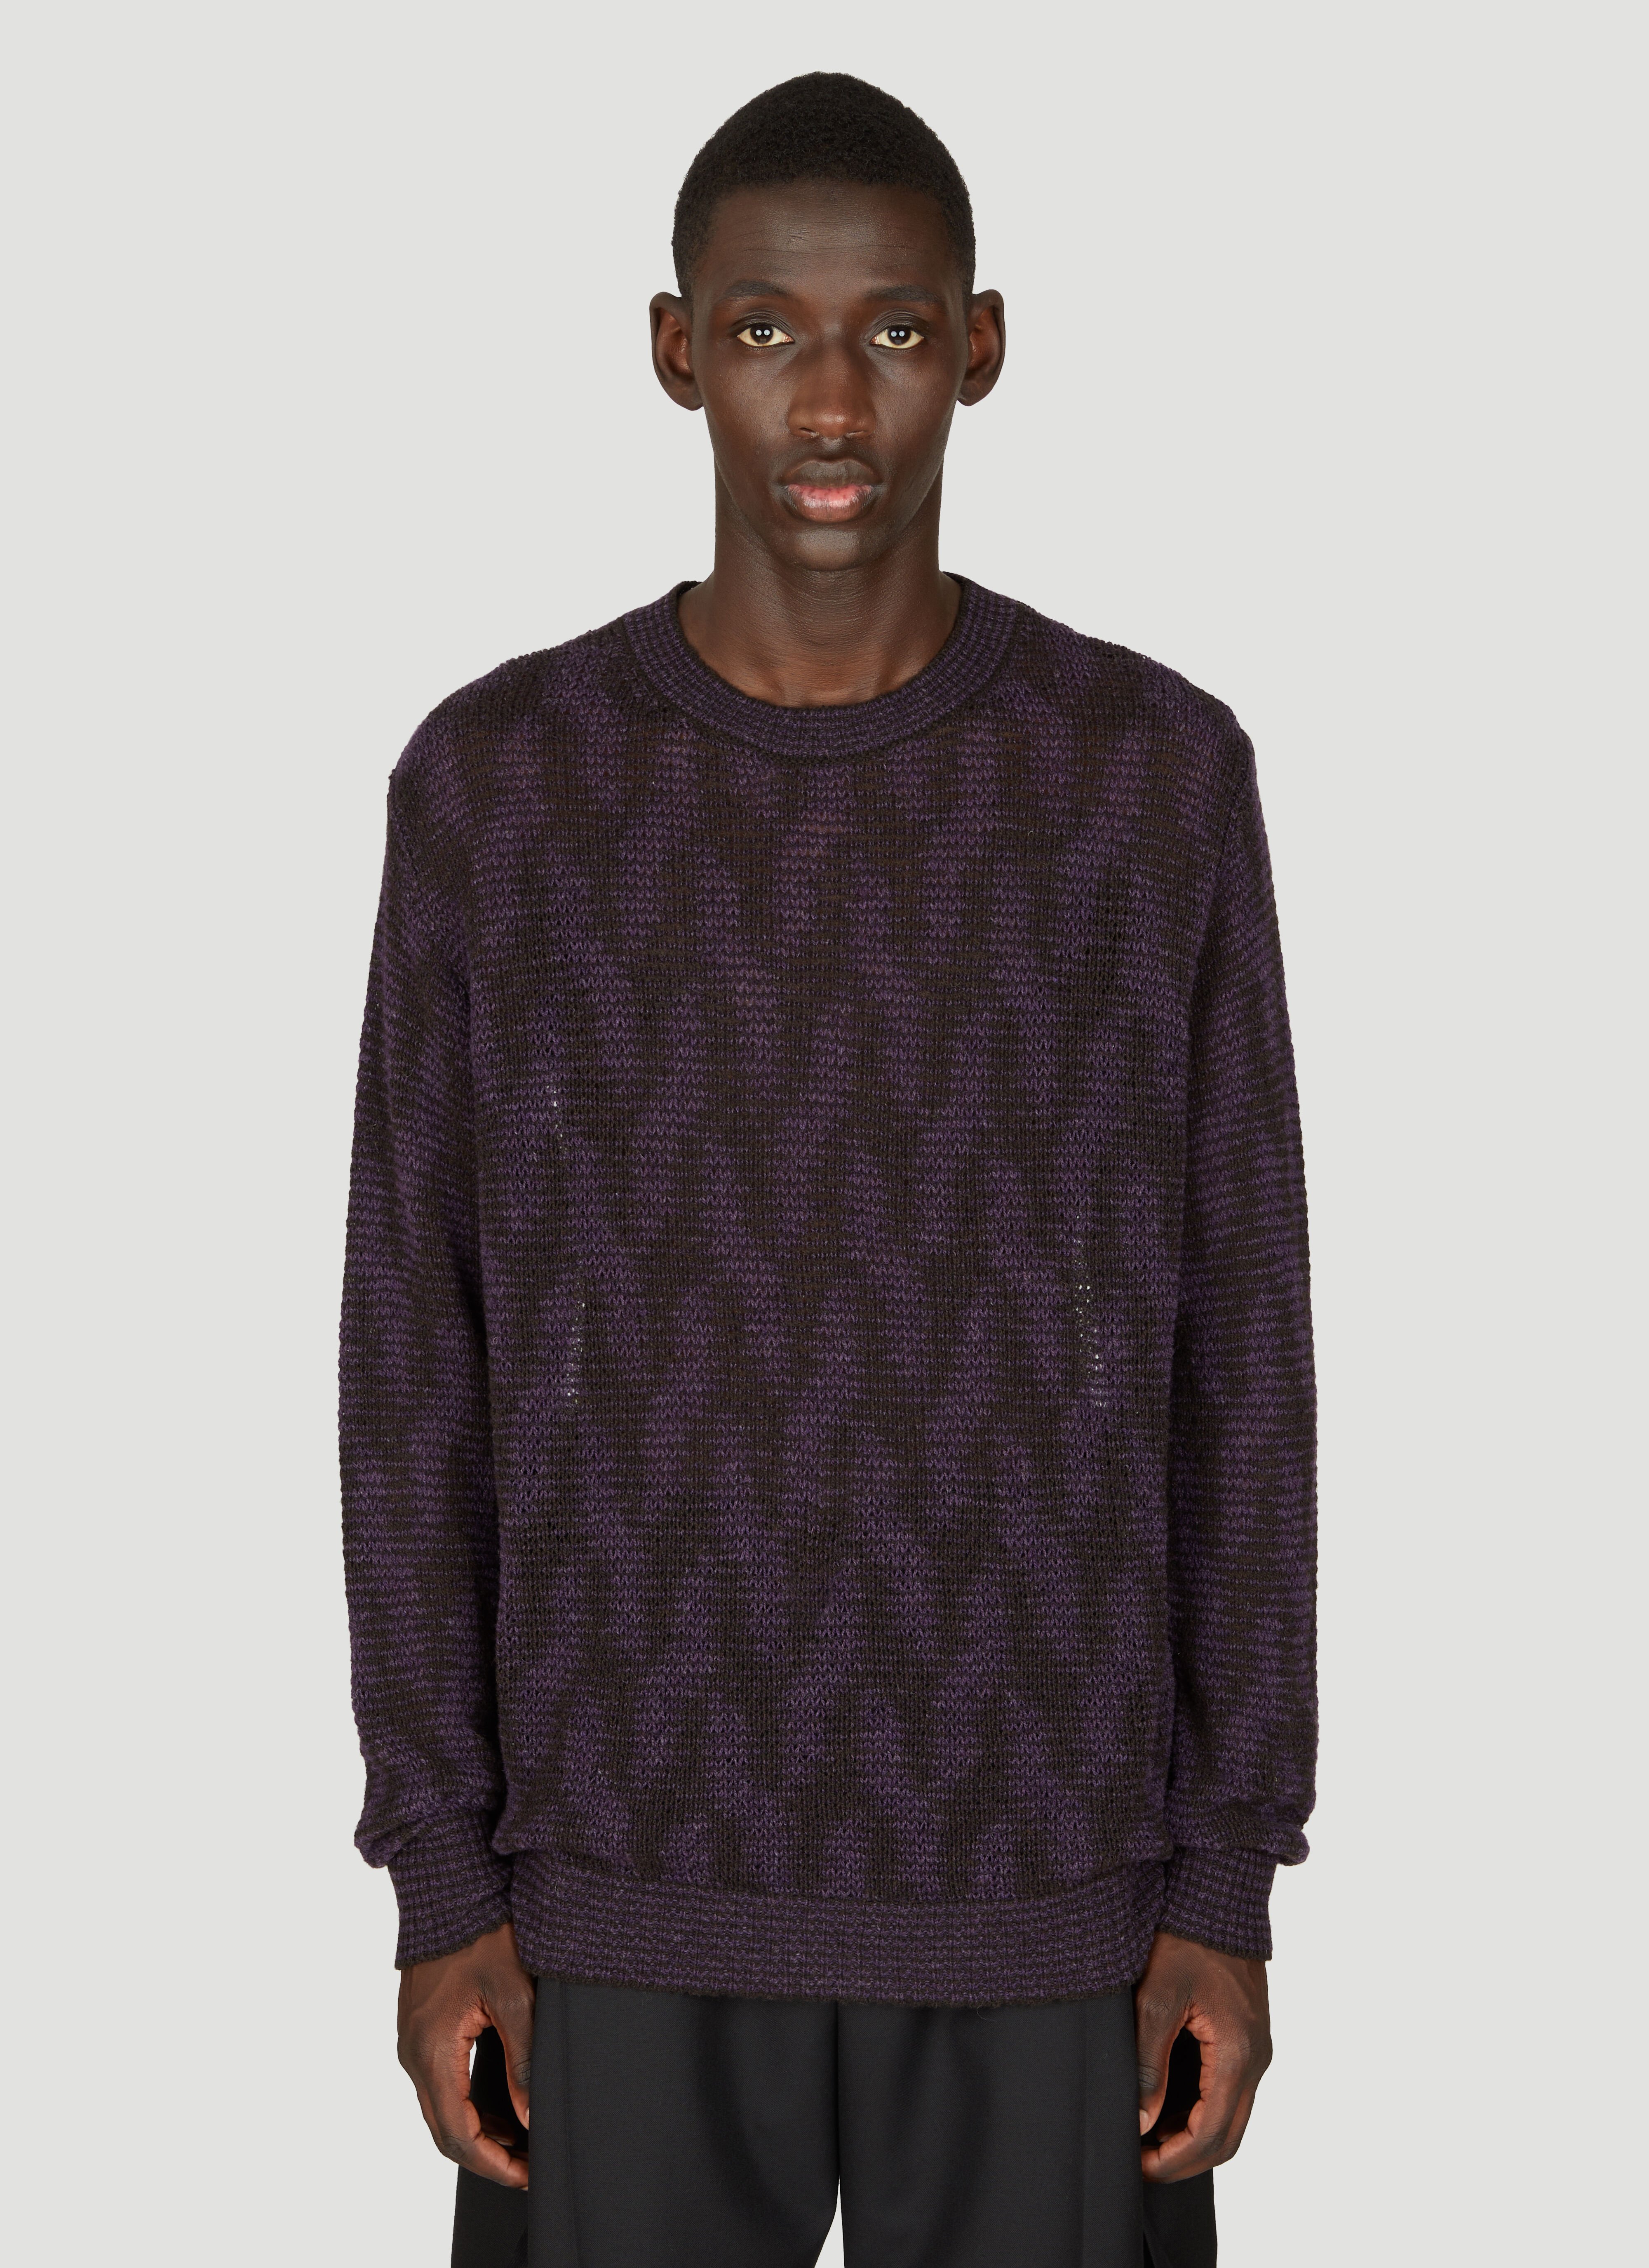 Dries Van Noten Jacquard Knit Sweater Grey dvn0156010